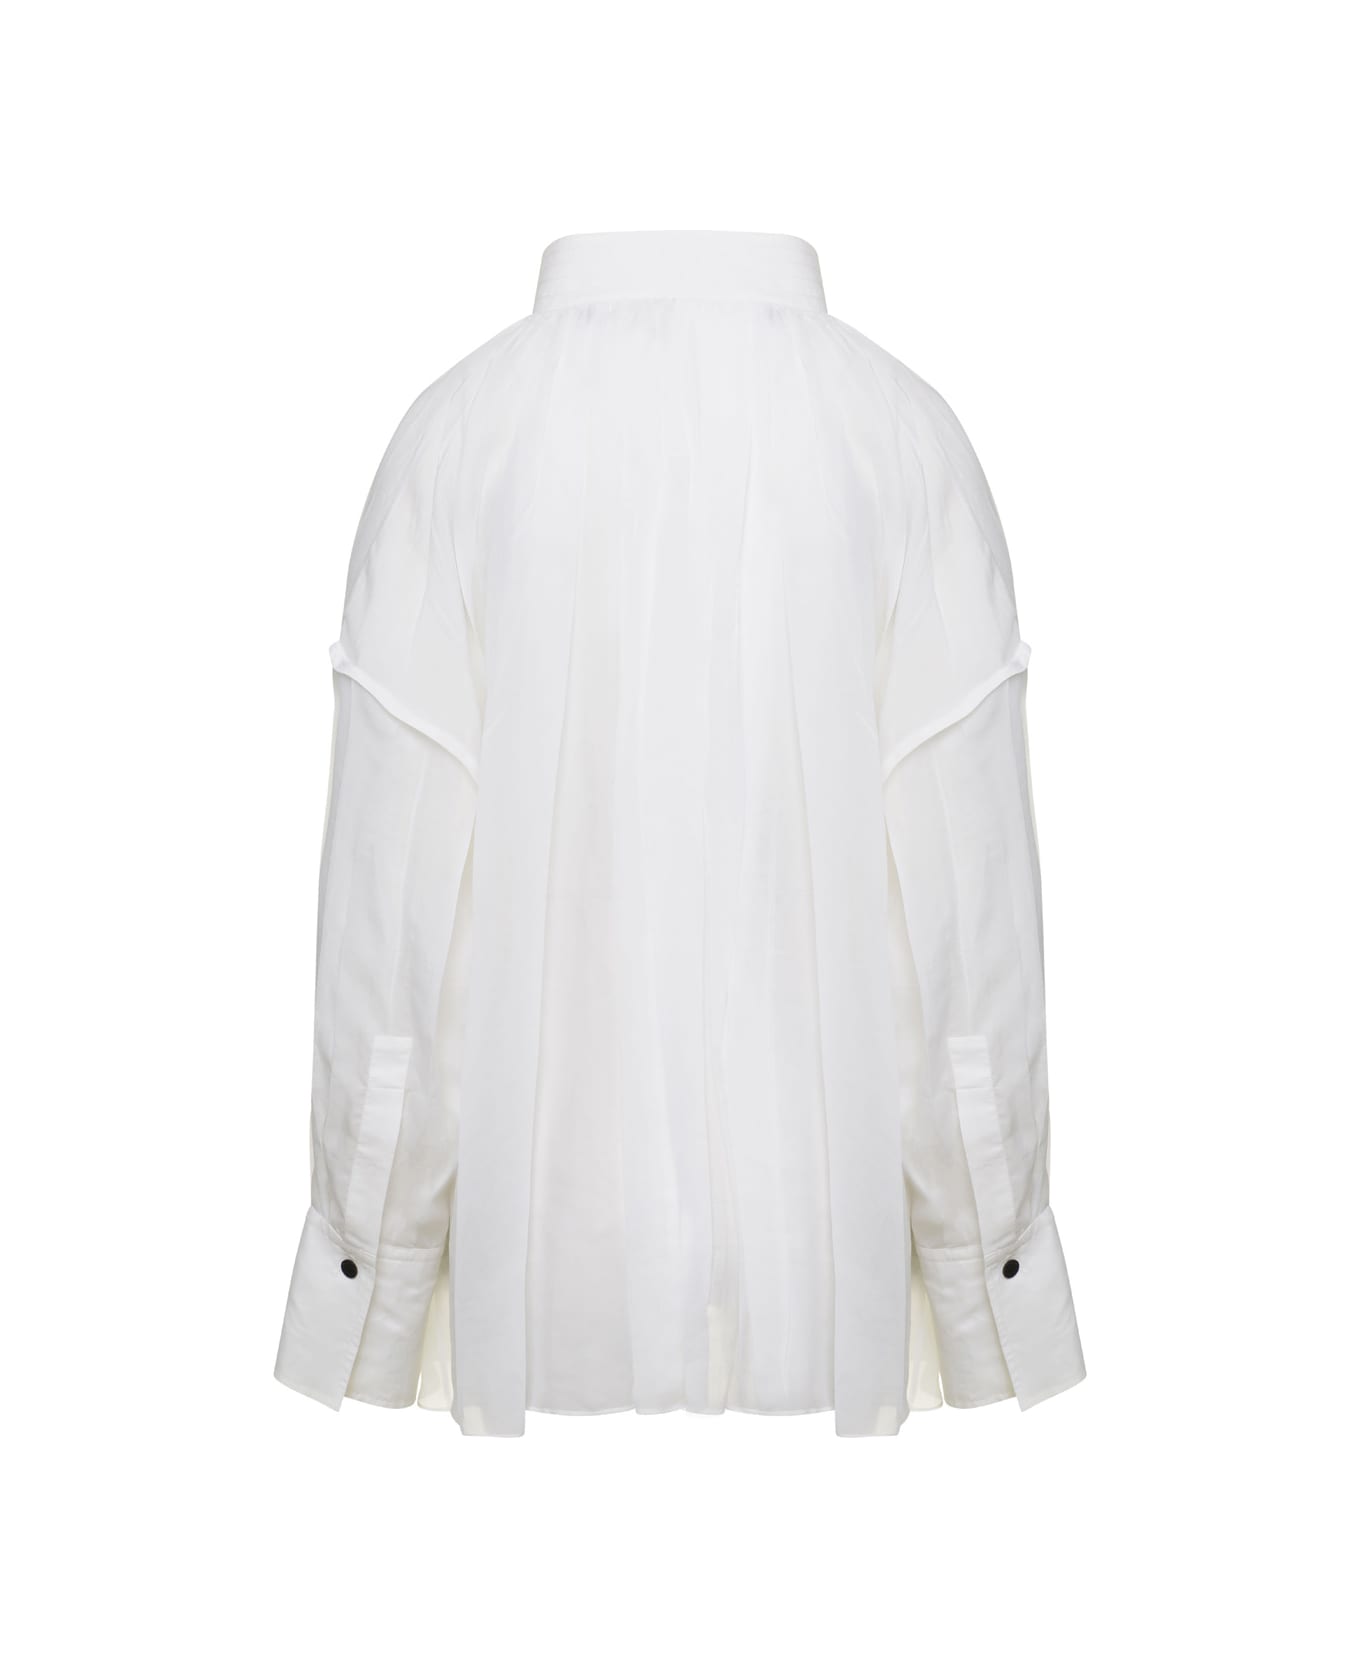 Ferragamo White Caftano Shirt In Silk Blend Woman - White ブラウス